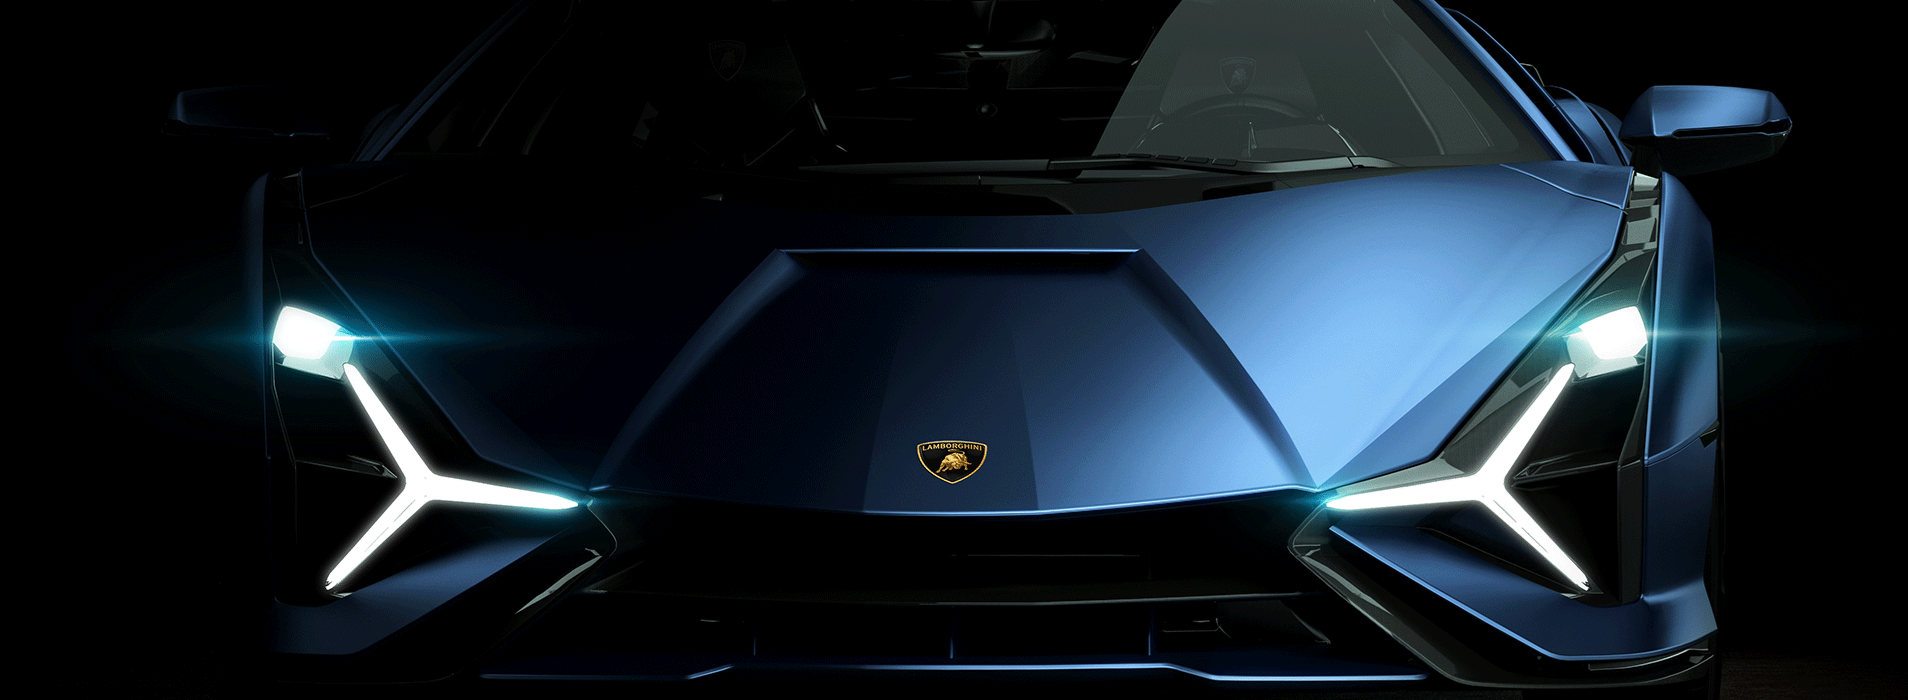 Lamborghini Stratasys | 3D Printing Helps Automotive